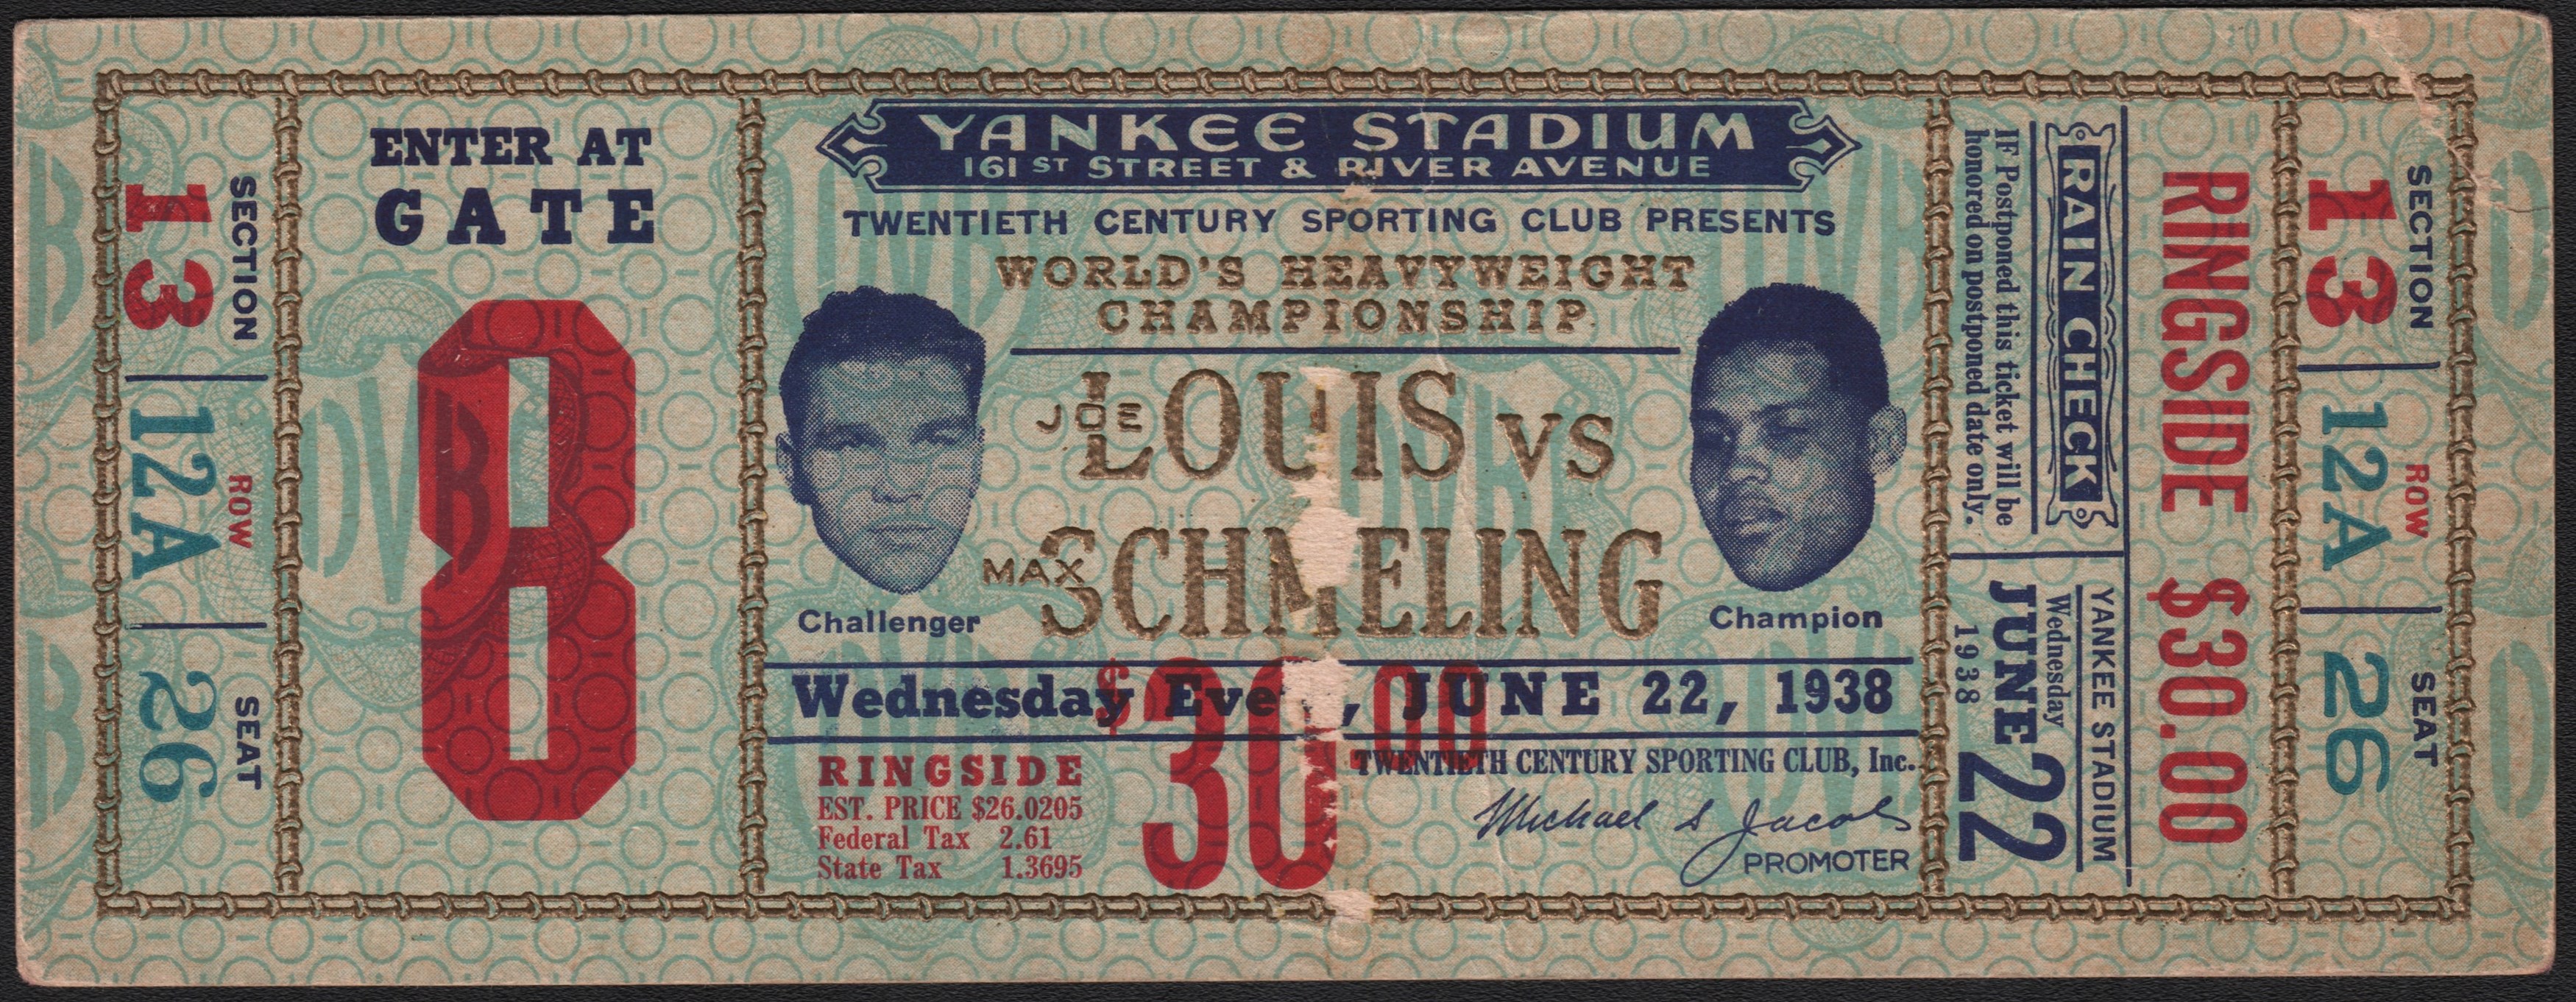 Muhammad Ali & Boxing - 1938 Louis vs Schmeling Full Ticket